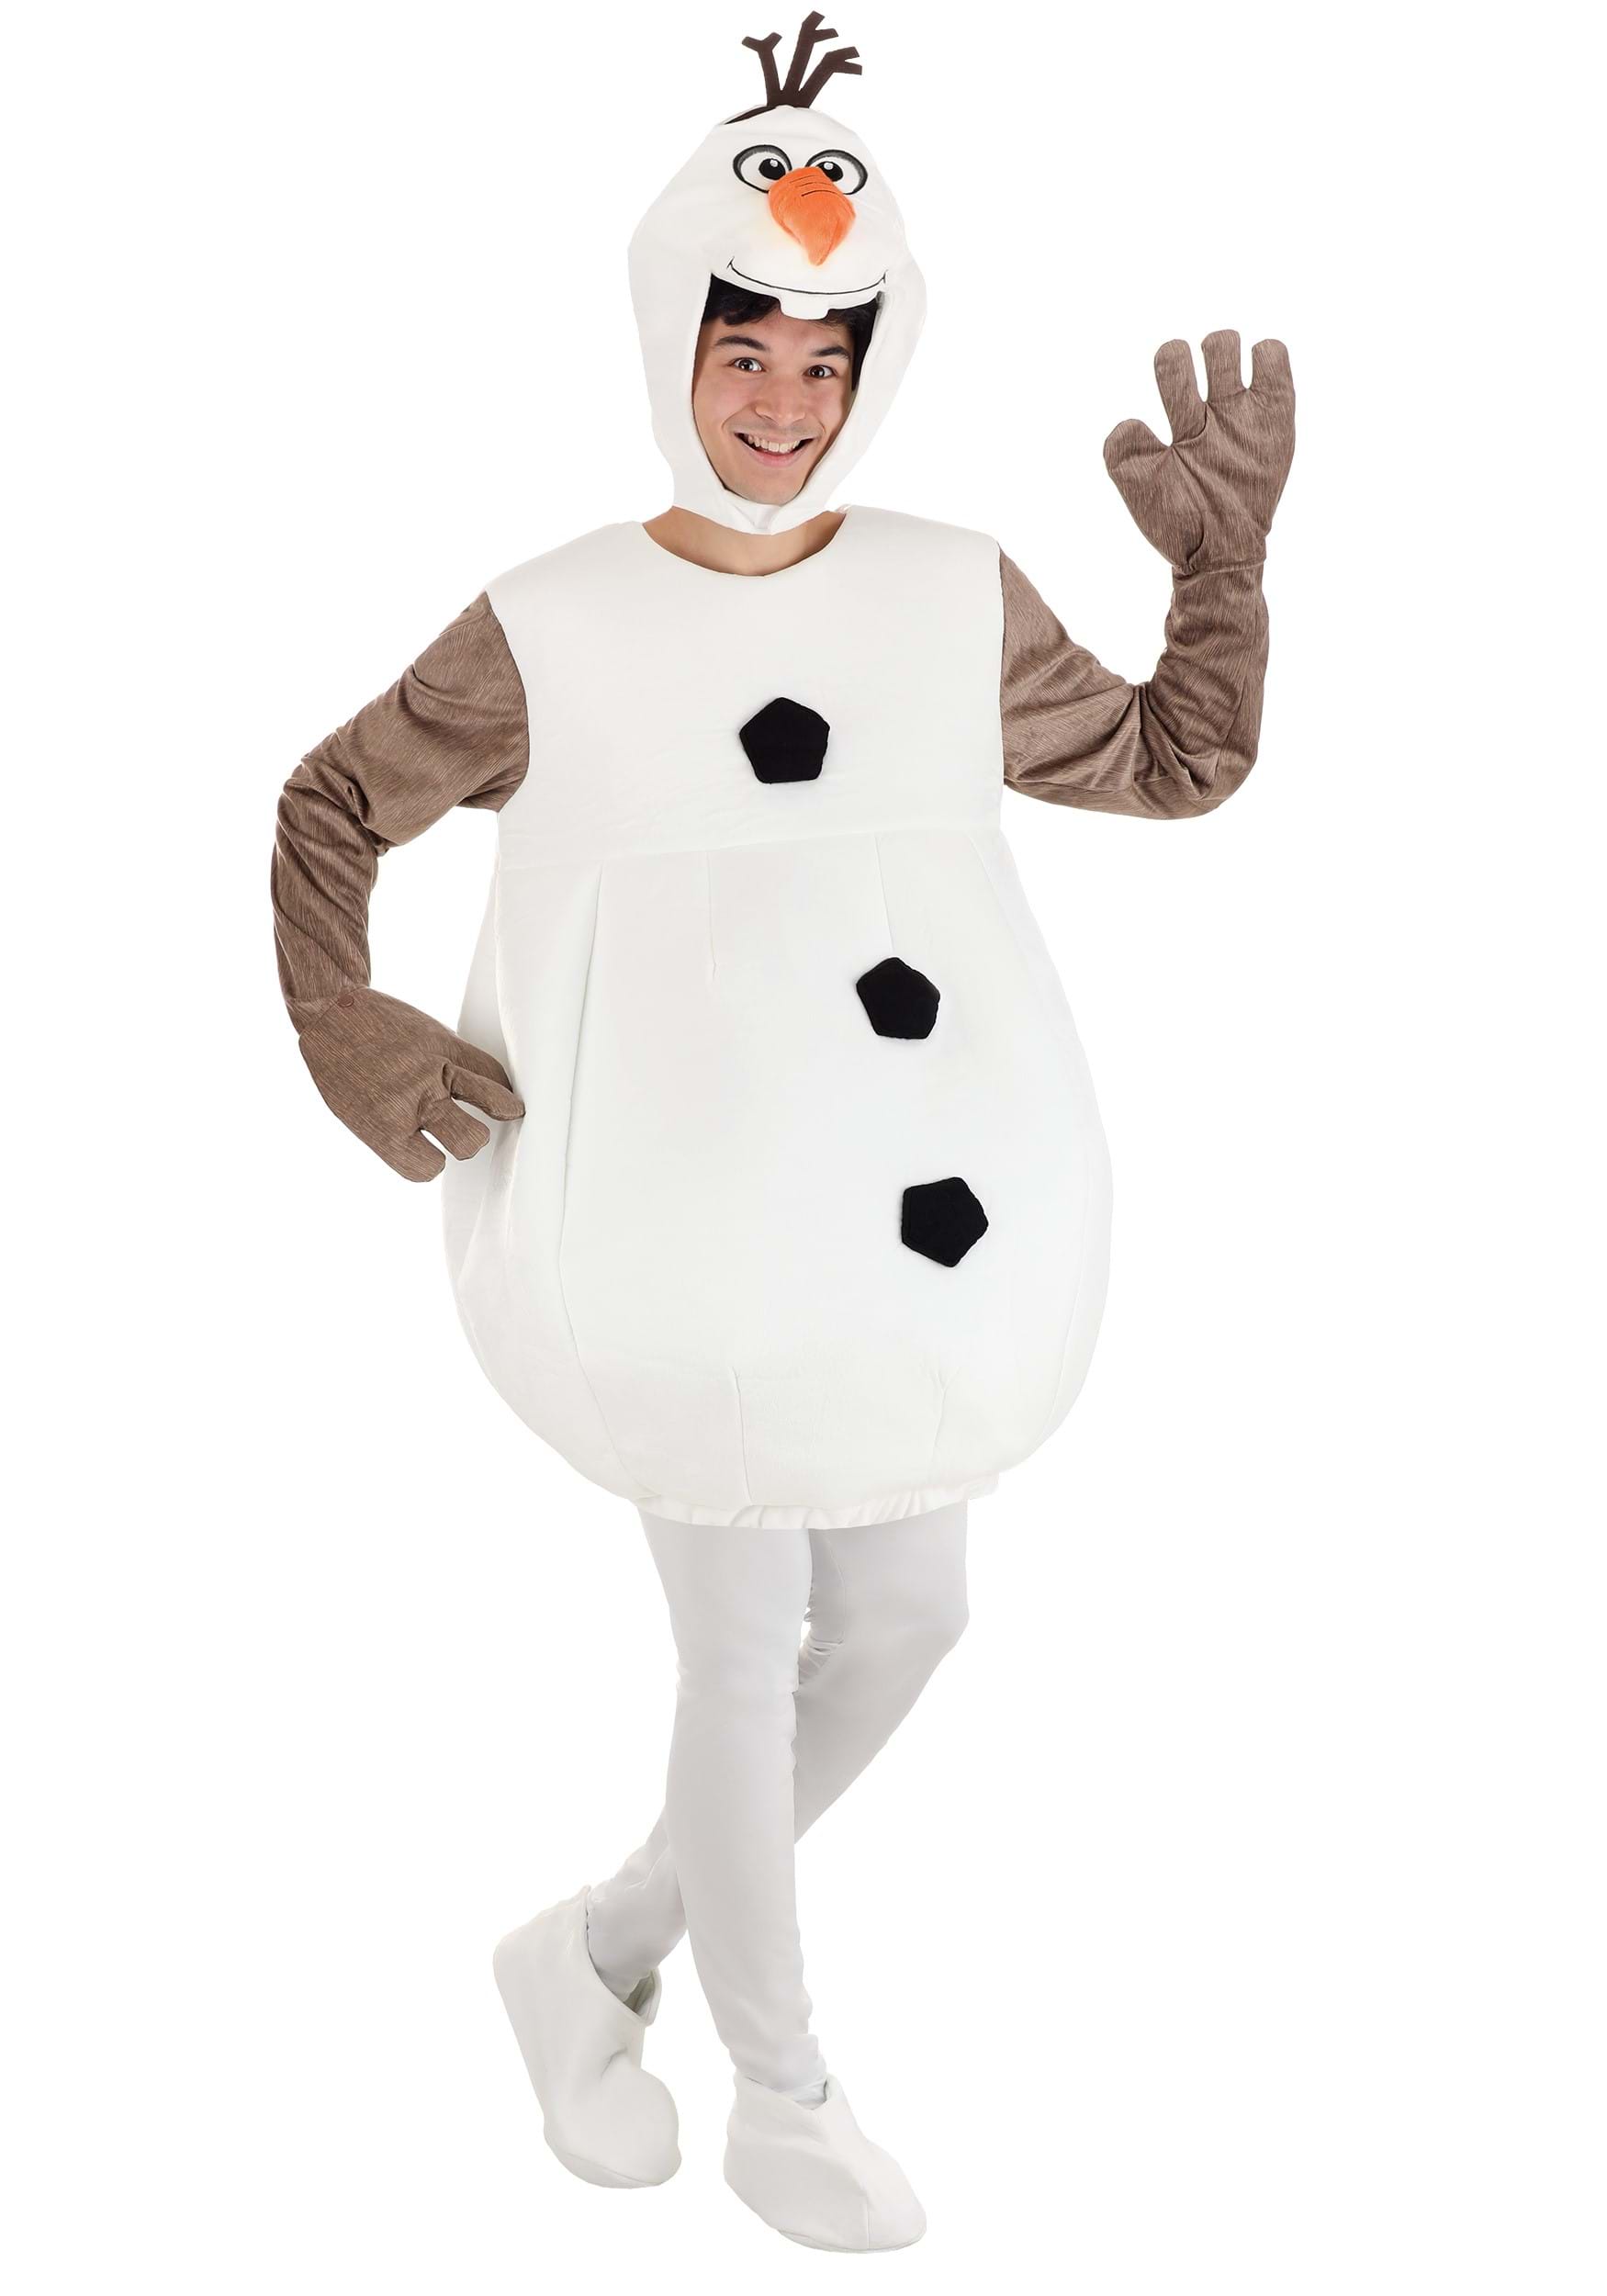 Photos - Fancy Dress FUN Costumes Frozen Olaf Adult Costume Orange/Brown/White FUN3499A